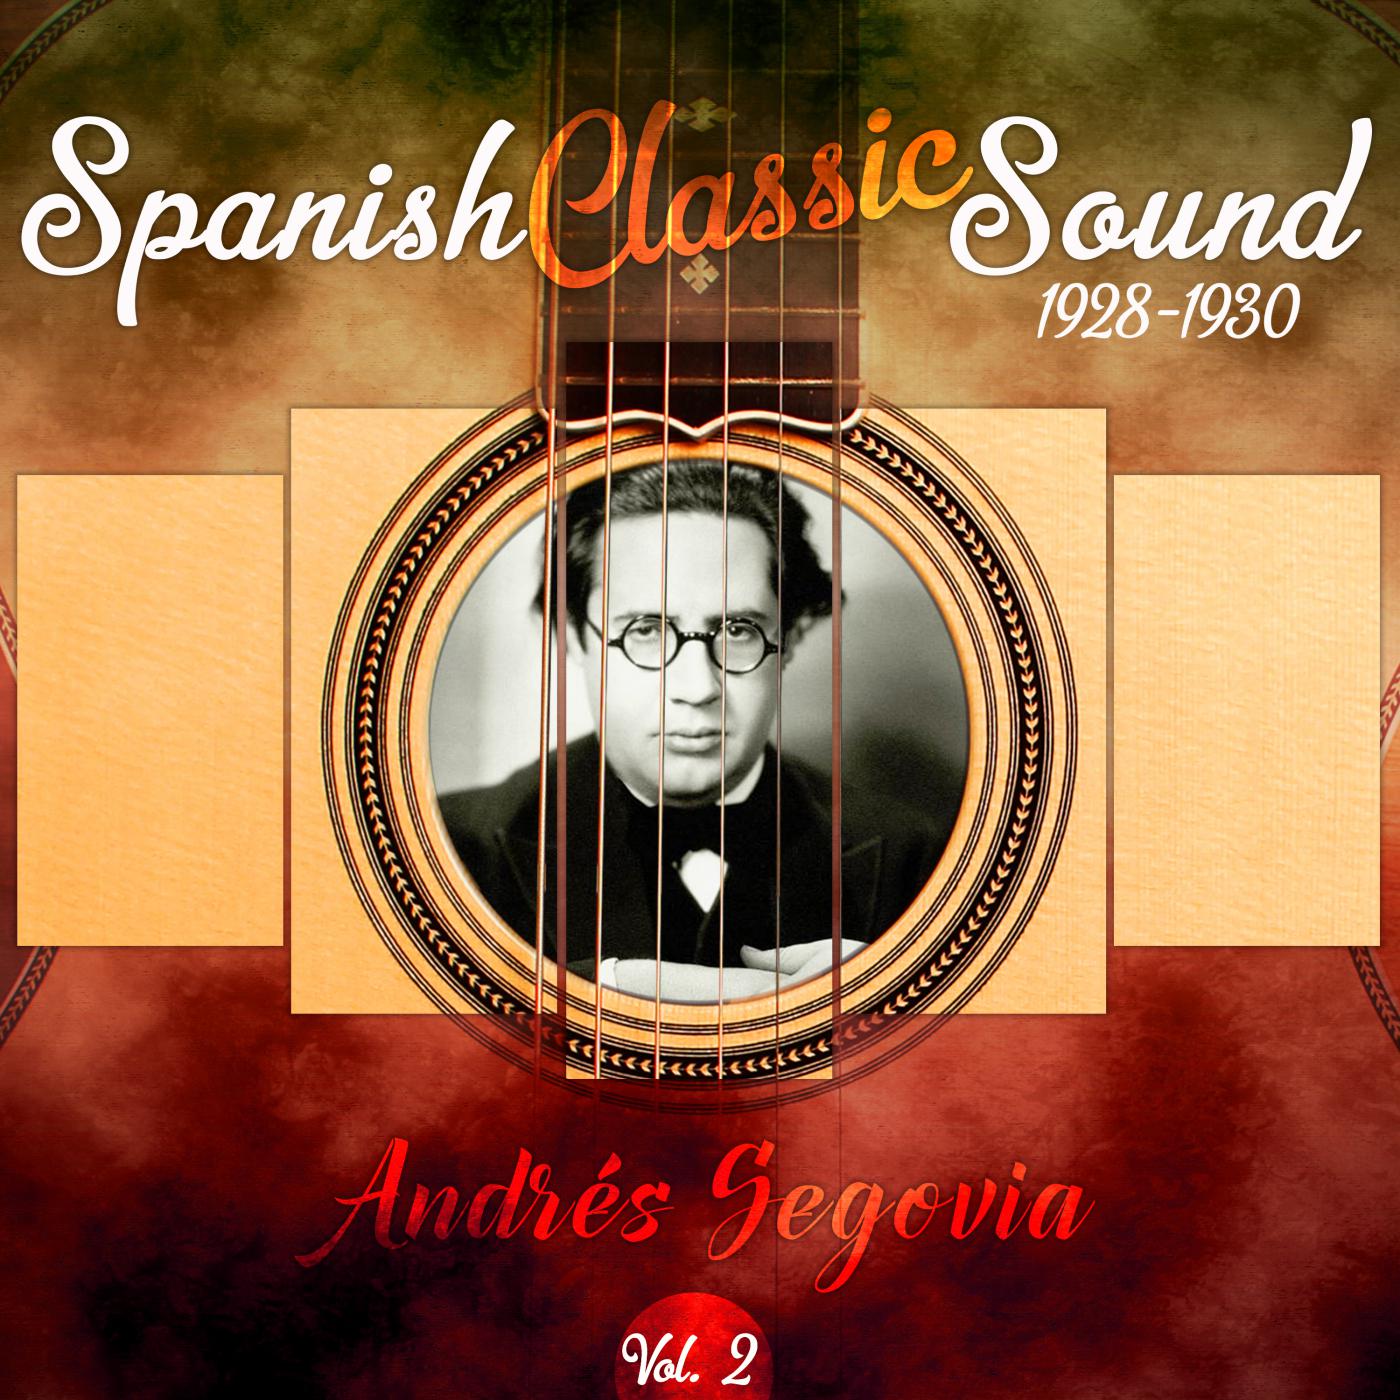 Spanish Classic Sound, Vol. 2 (1928 - 1930)